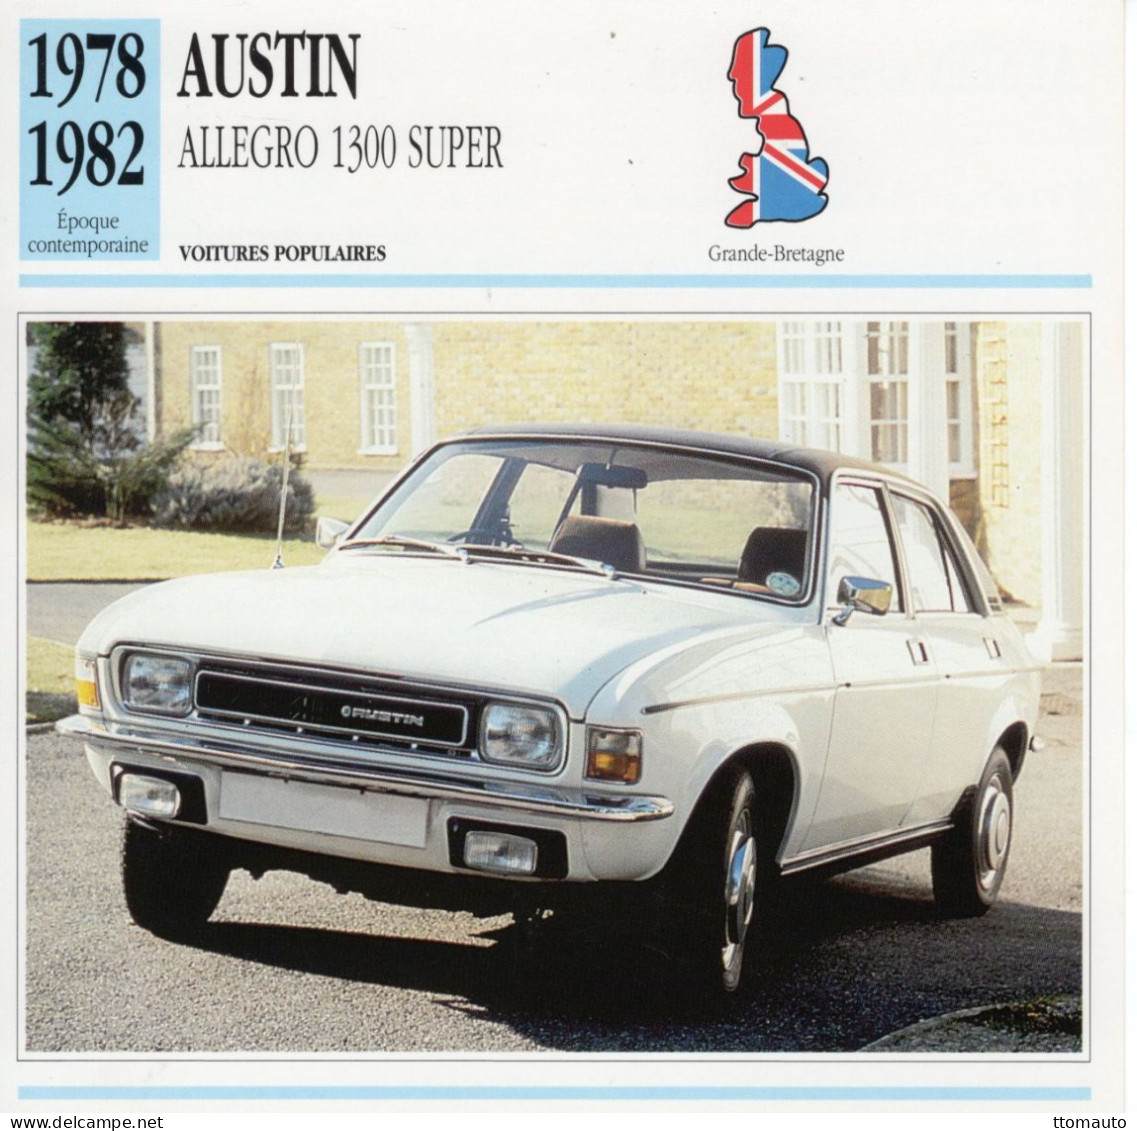 Austin Allegro 1300 Super -  1980  - Voiture Populaire -  Fiche Technique Automobile (GB) - Voitures